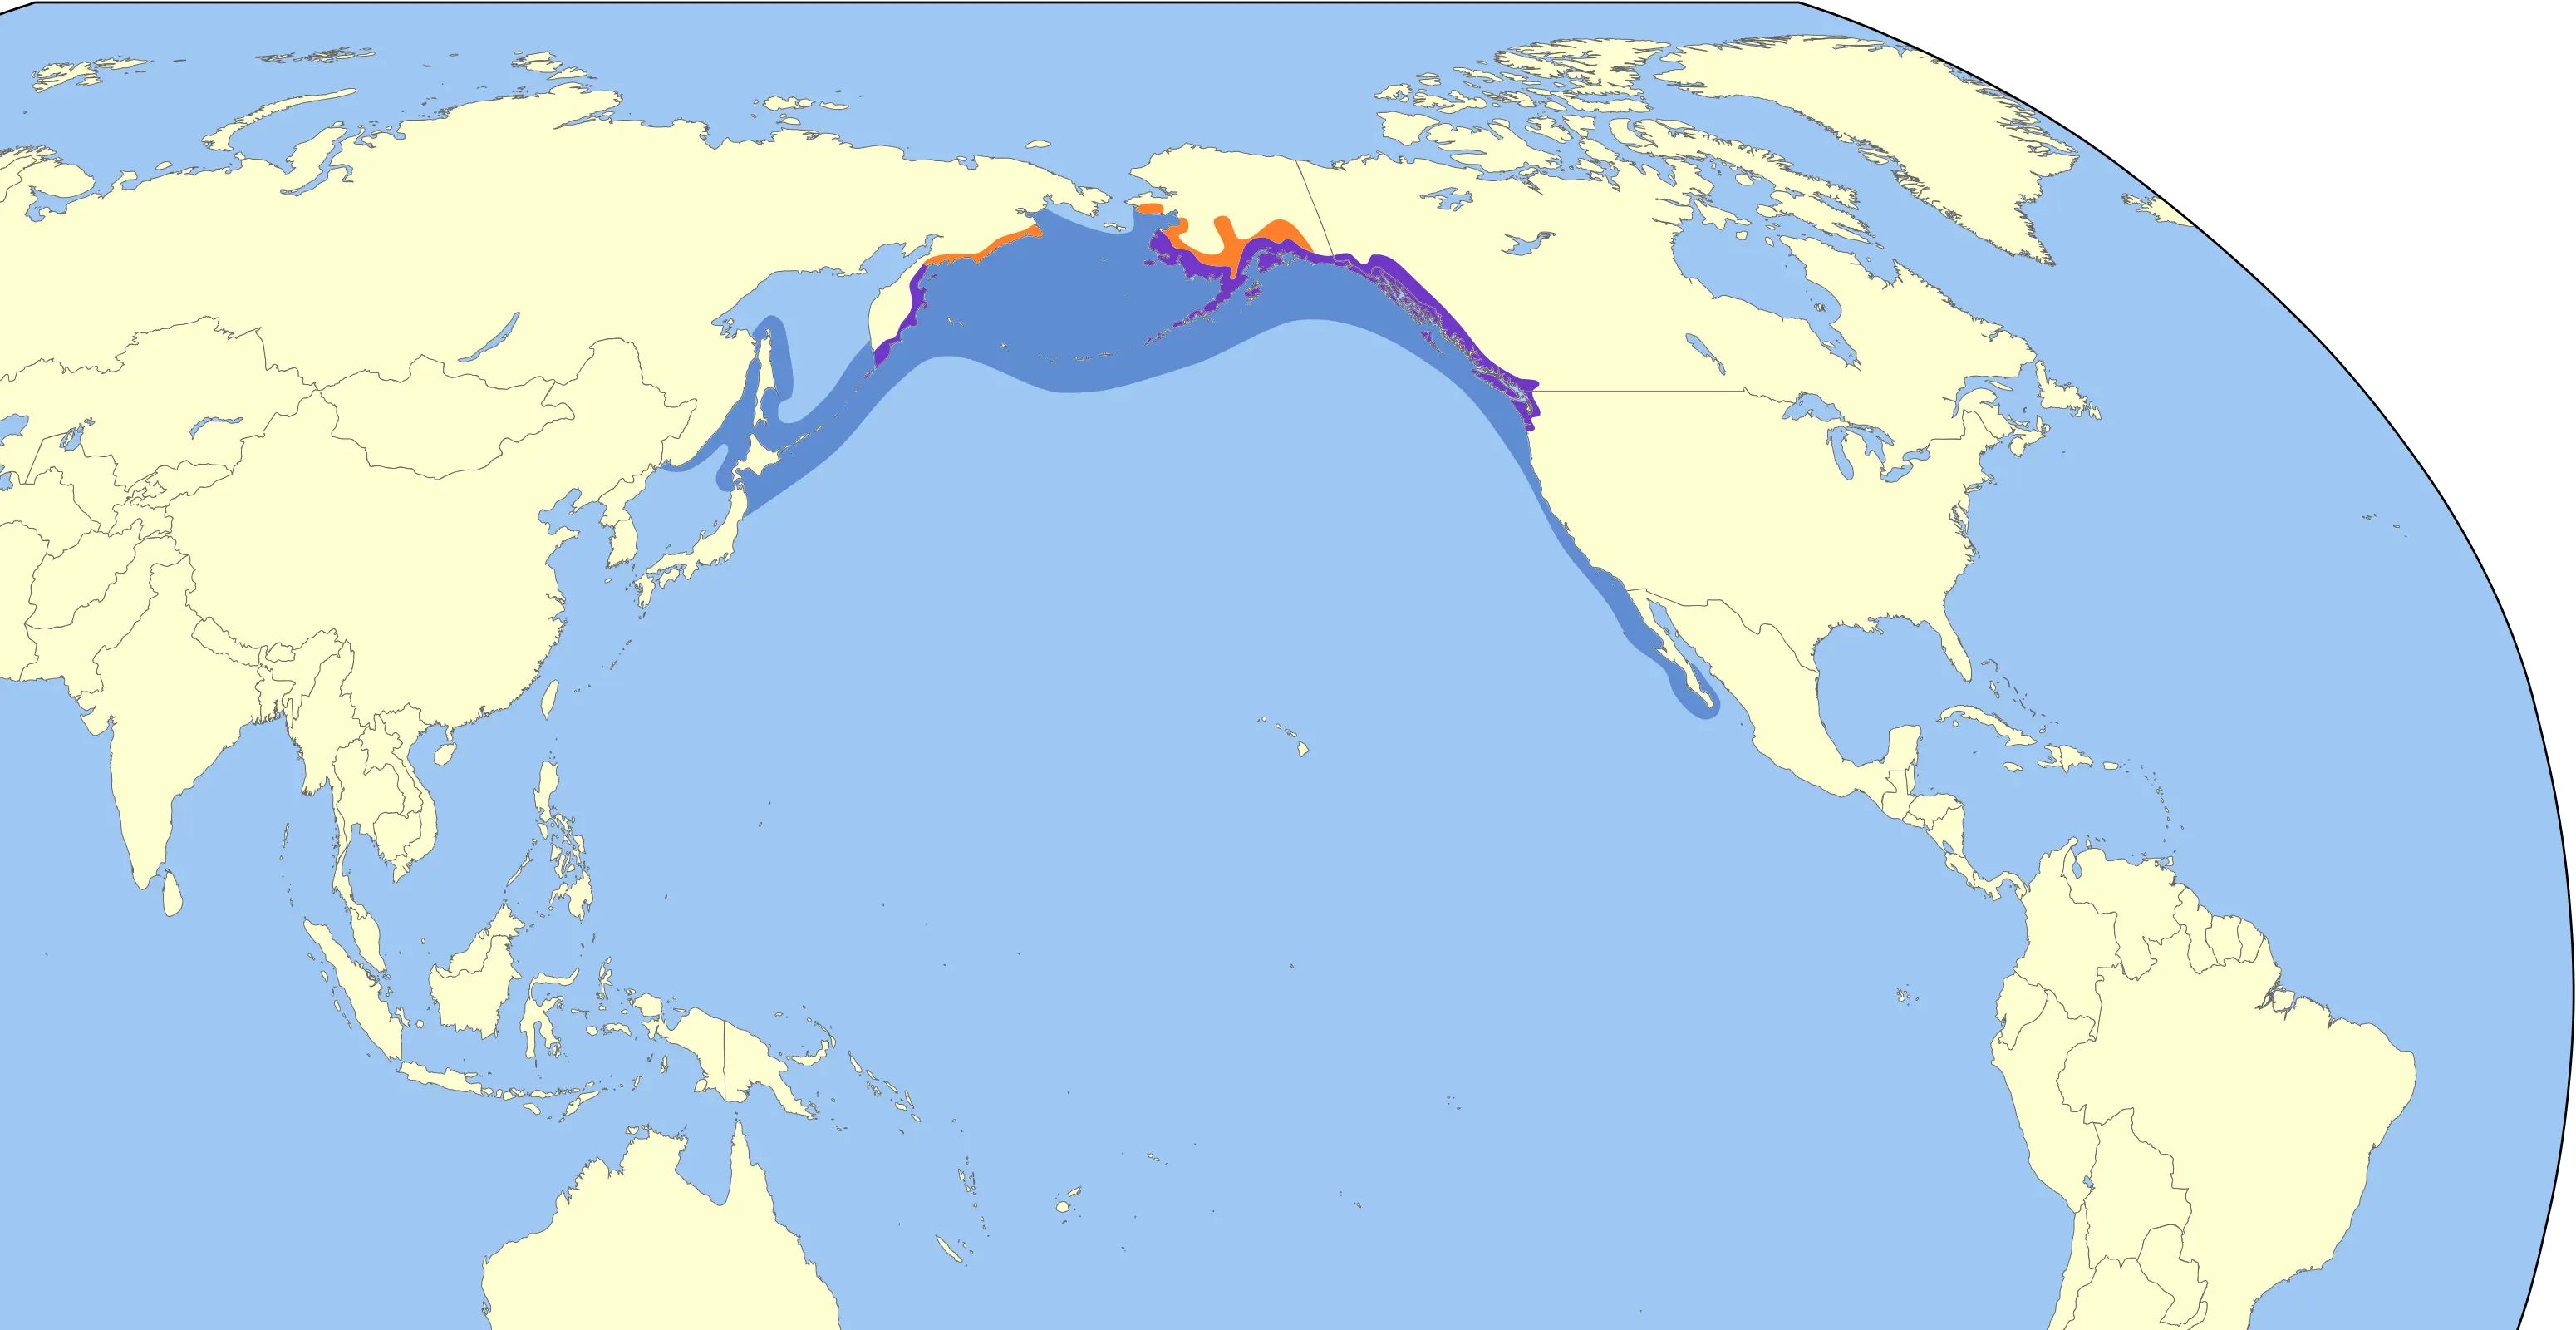 Glaucous-winged gull habitat map